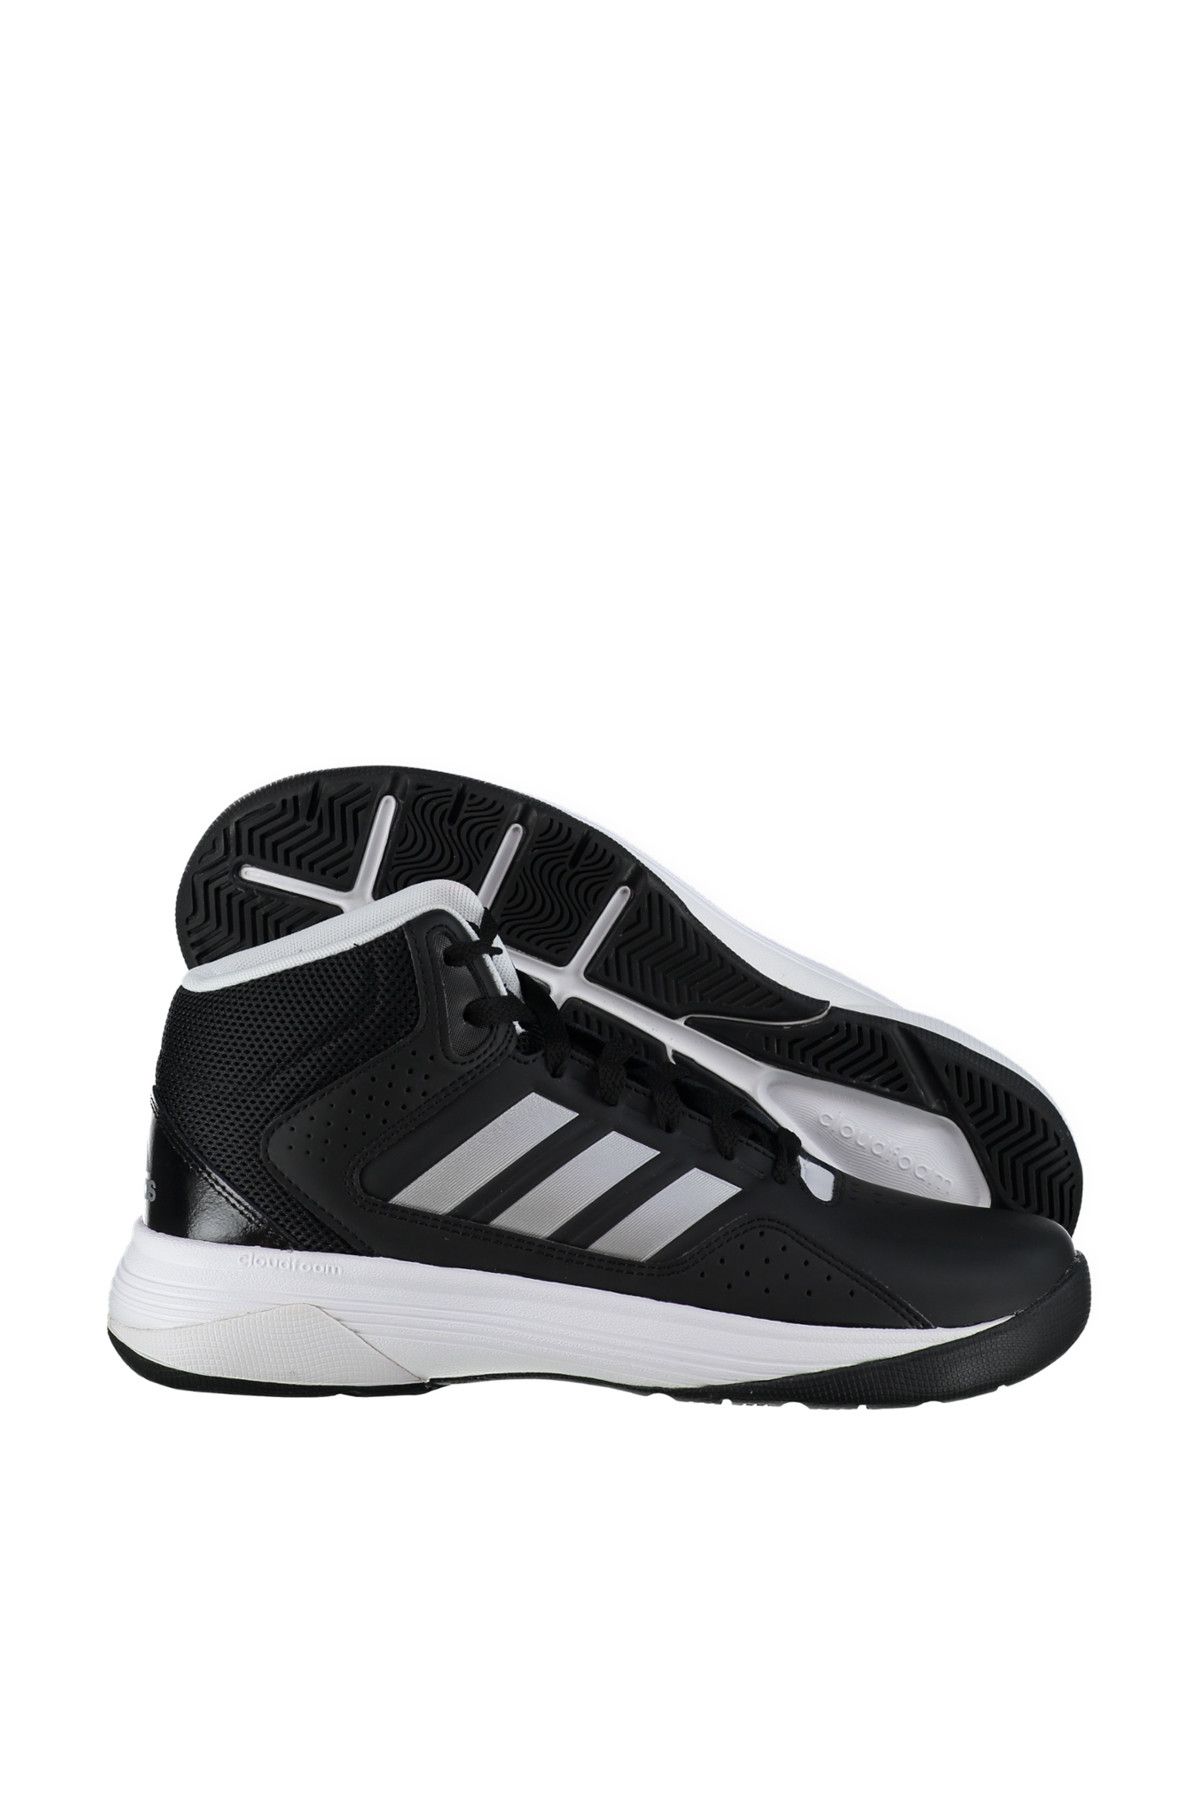 adidas Erkek Basketbol Ayakkabısı - CLOUDFOAM ILATION MID - AQ1362